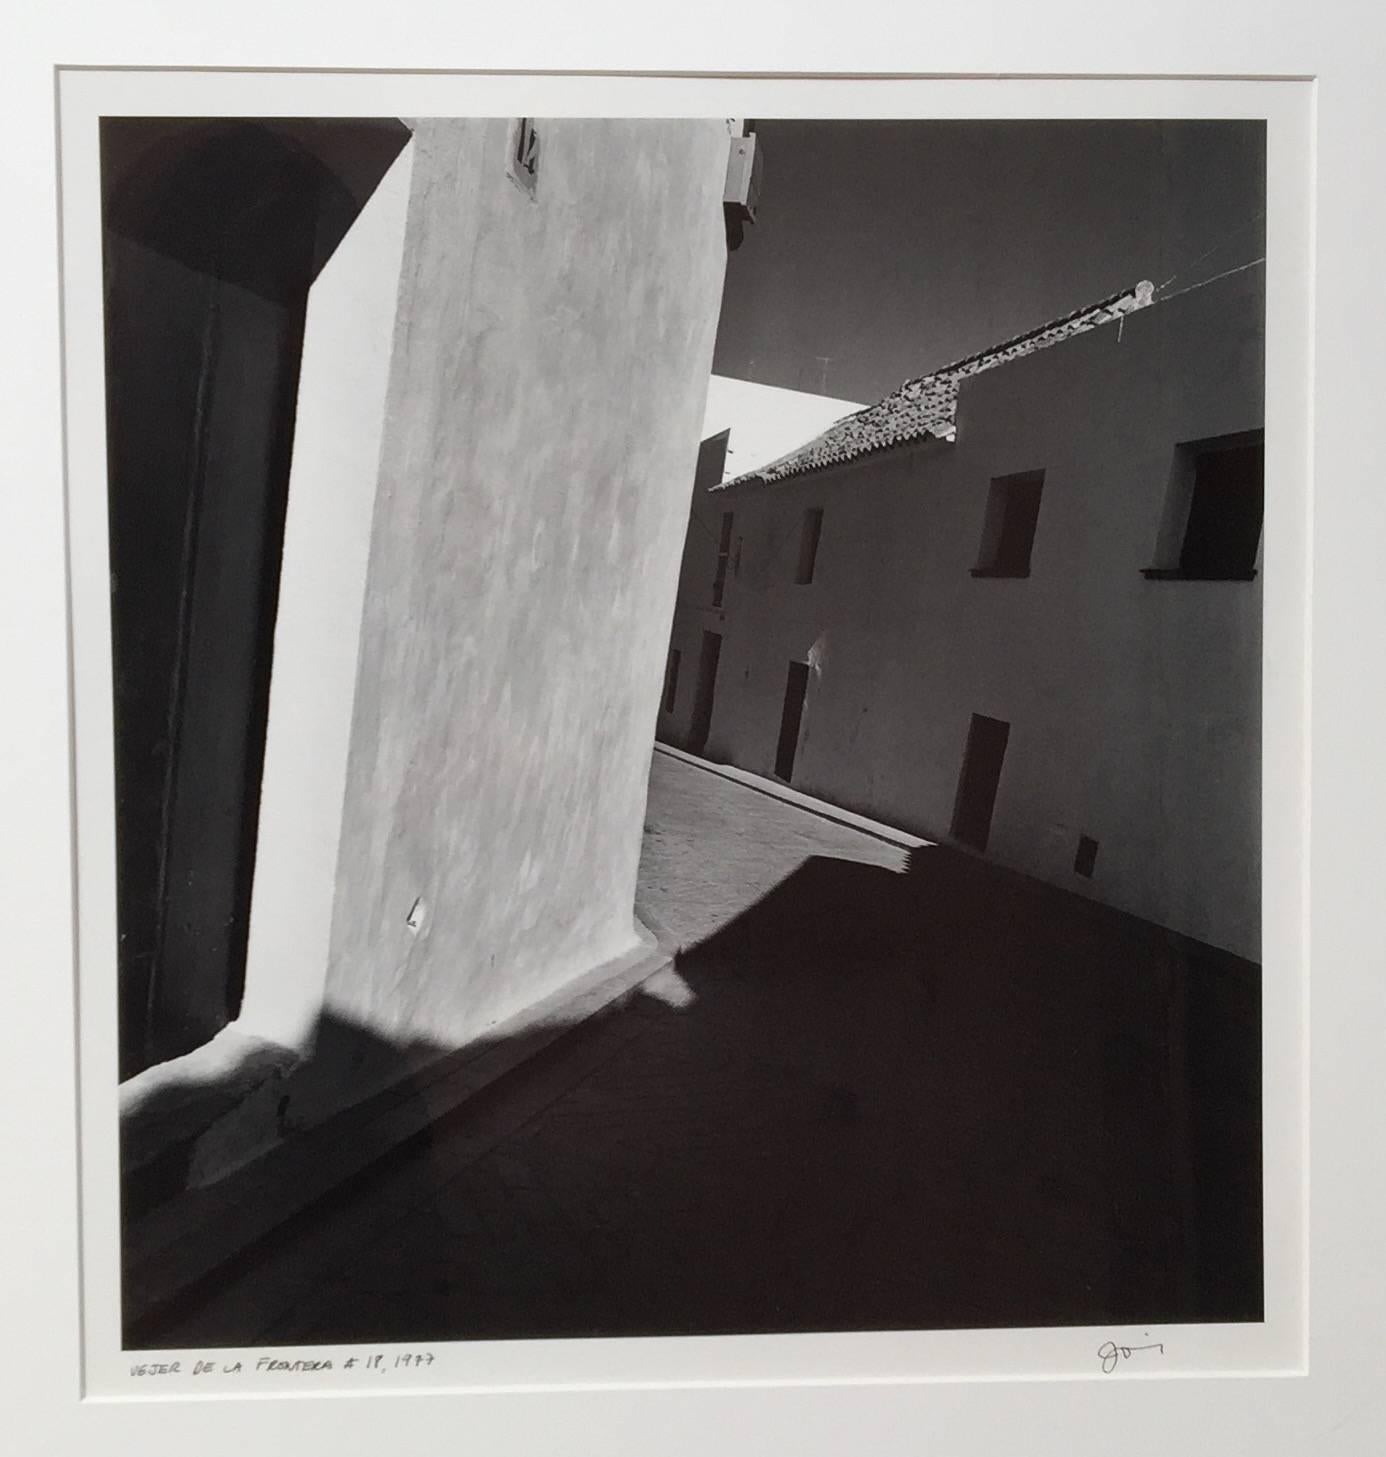 Vejer de la Frontera #18, Silver Gelatin Print, 1977 - Black Black and White Photograph by Jed Fielding